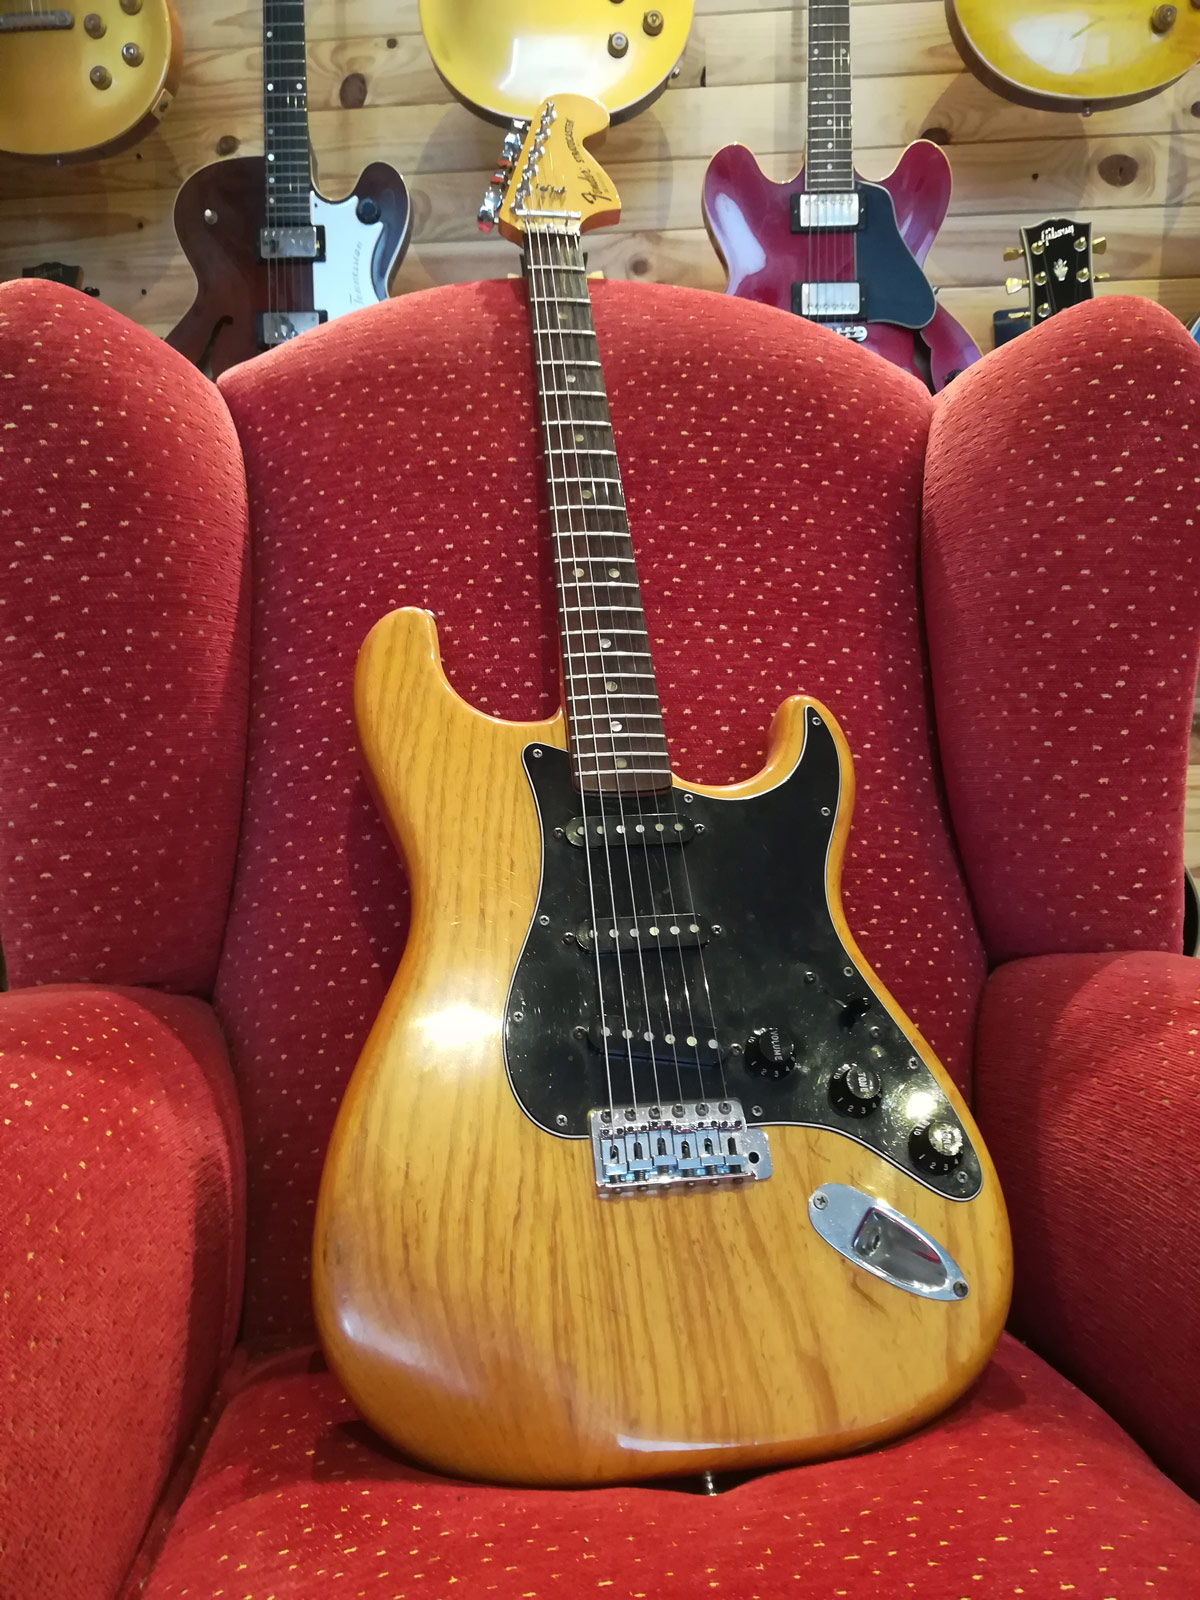   Fender stratocaster Late 70s  